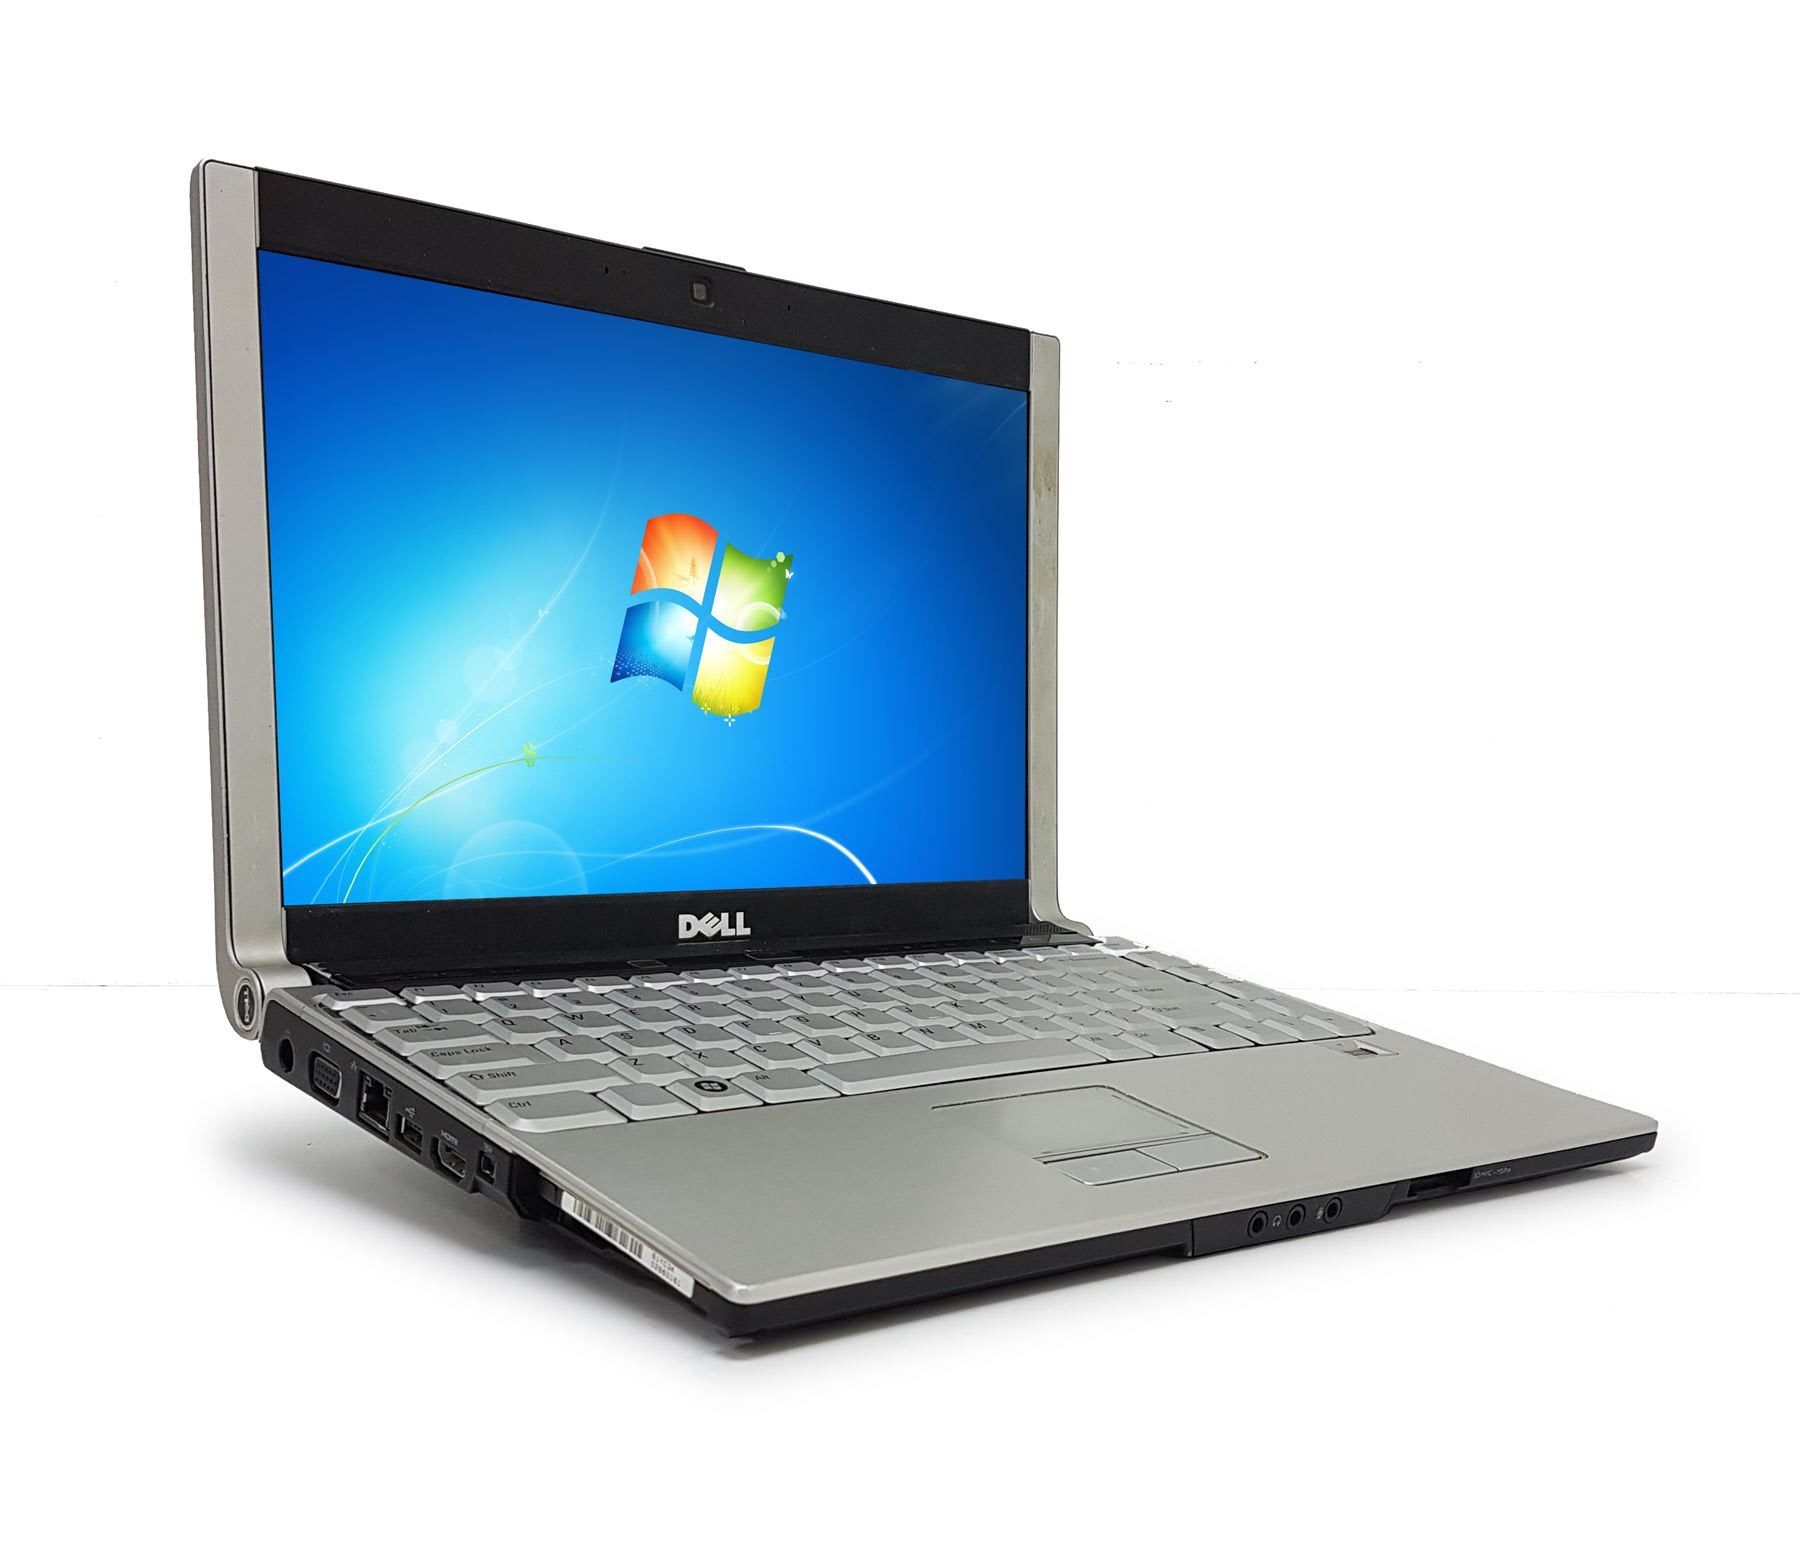 Dell XPS m1330. Dell Inspiron XPS m2010. Dell Inspiron 1720 17" Notebook Intel Core 2 Duo 2.0 GHZ 3gb Ram 320gb + win 7 хорактерисьтики. Dell Latitude XPS I 1998. Купить ноутбук интел